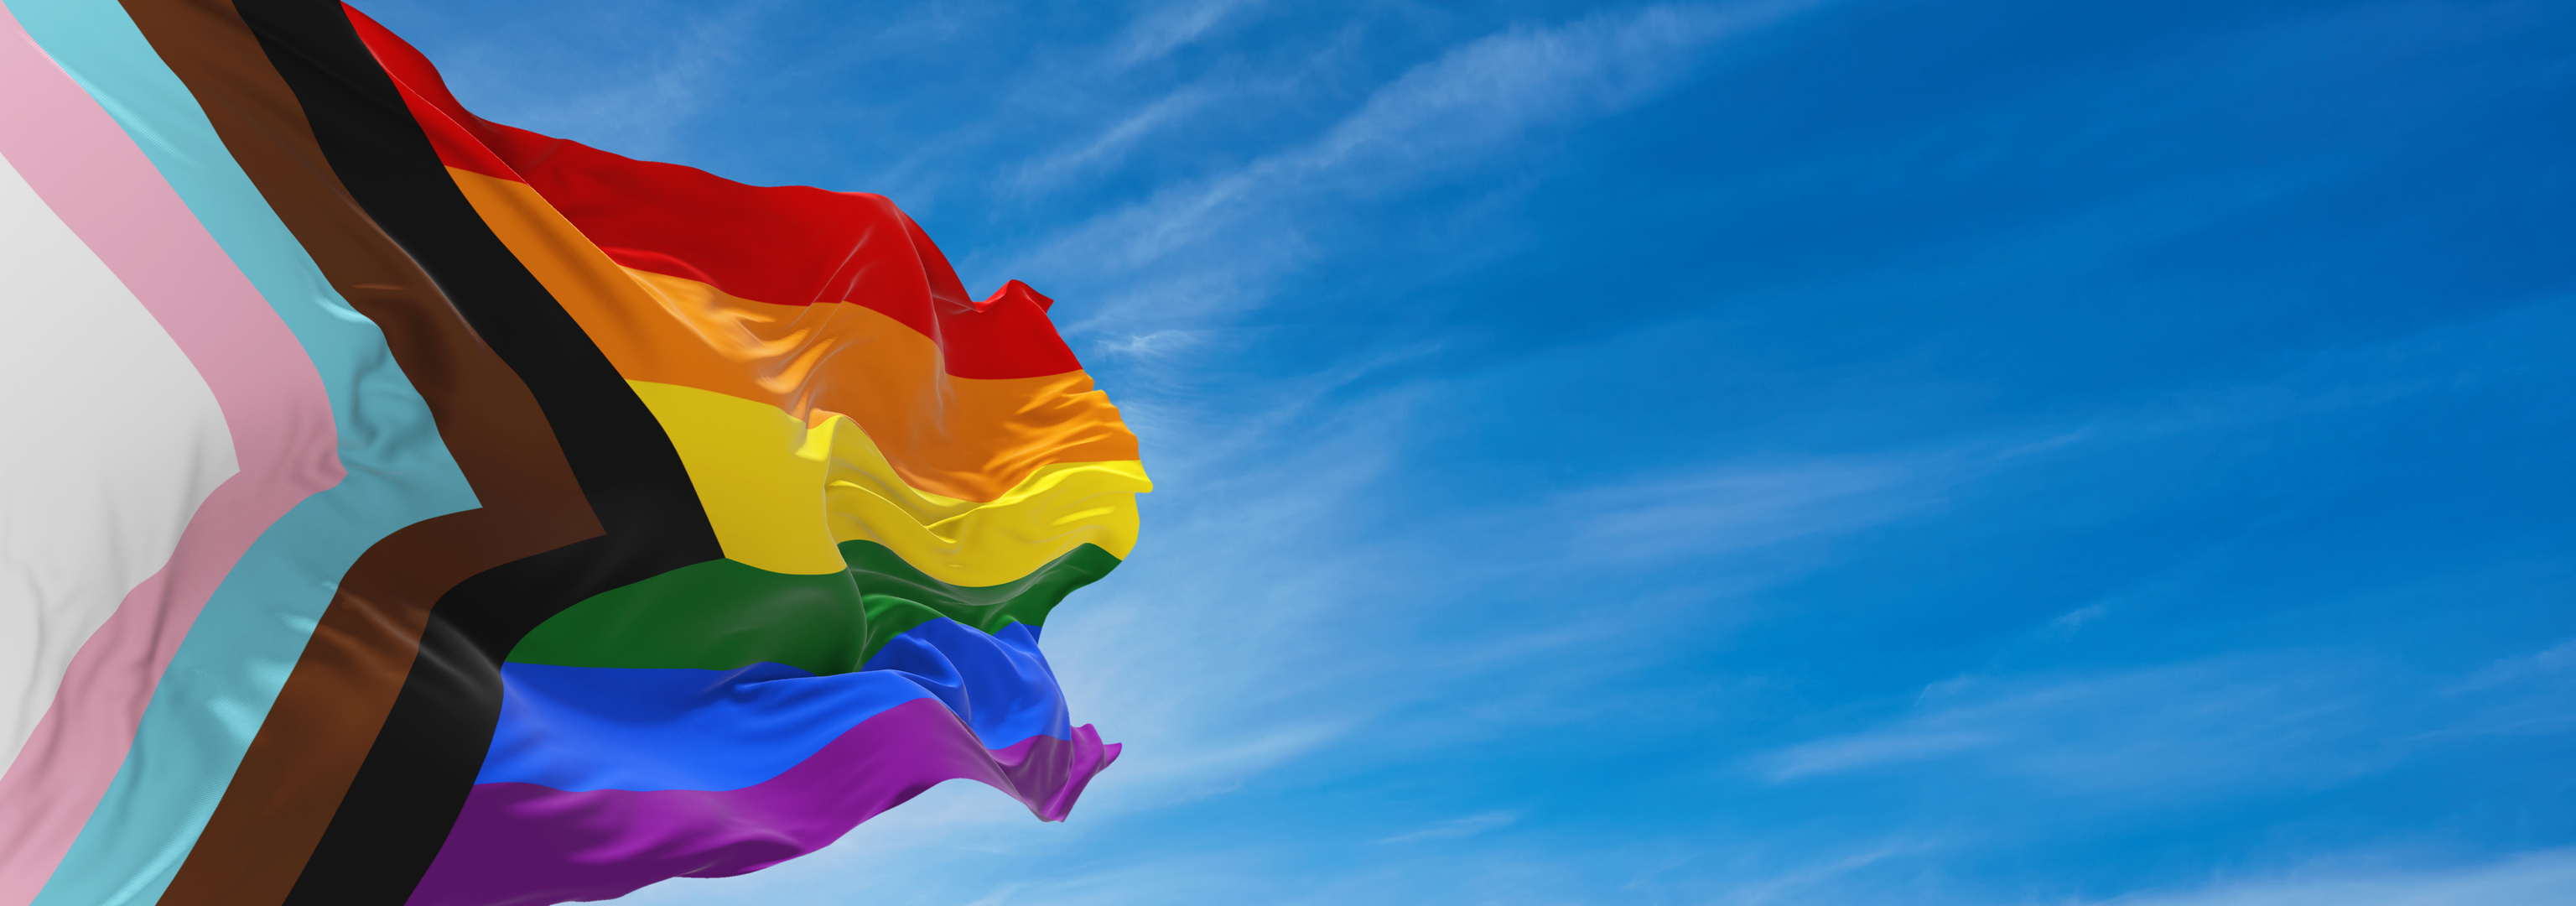 Waving Progress LGBTQ Rainbow Pride Flag on Blue Sky